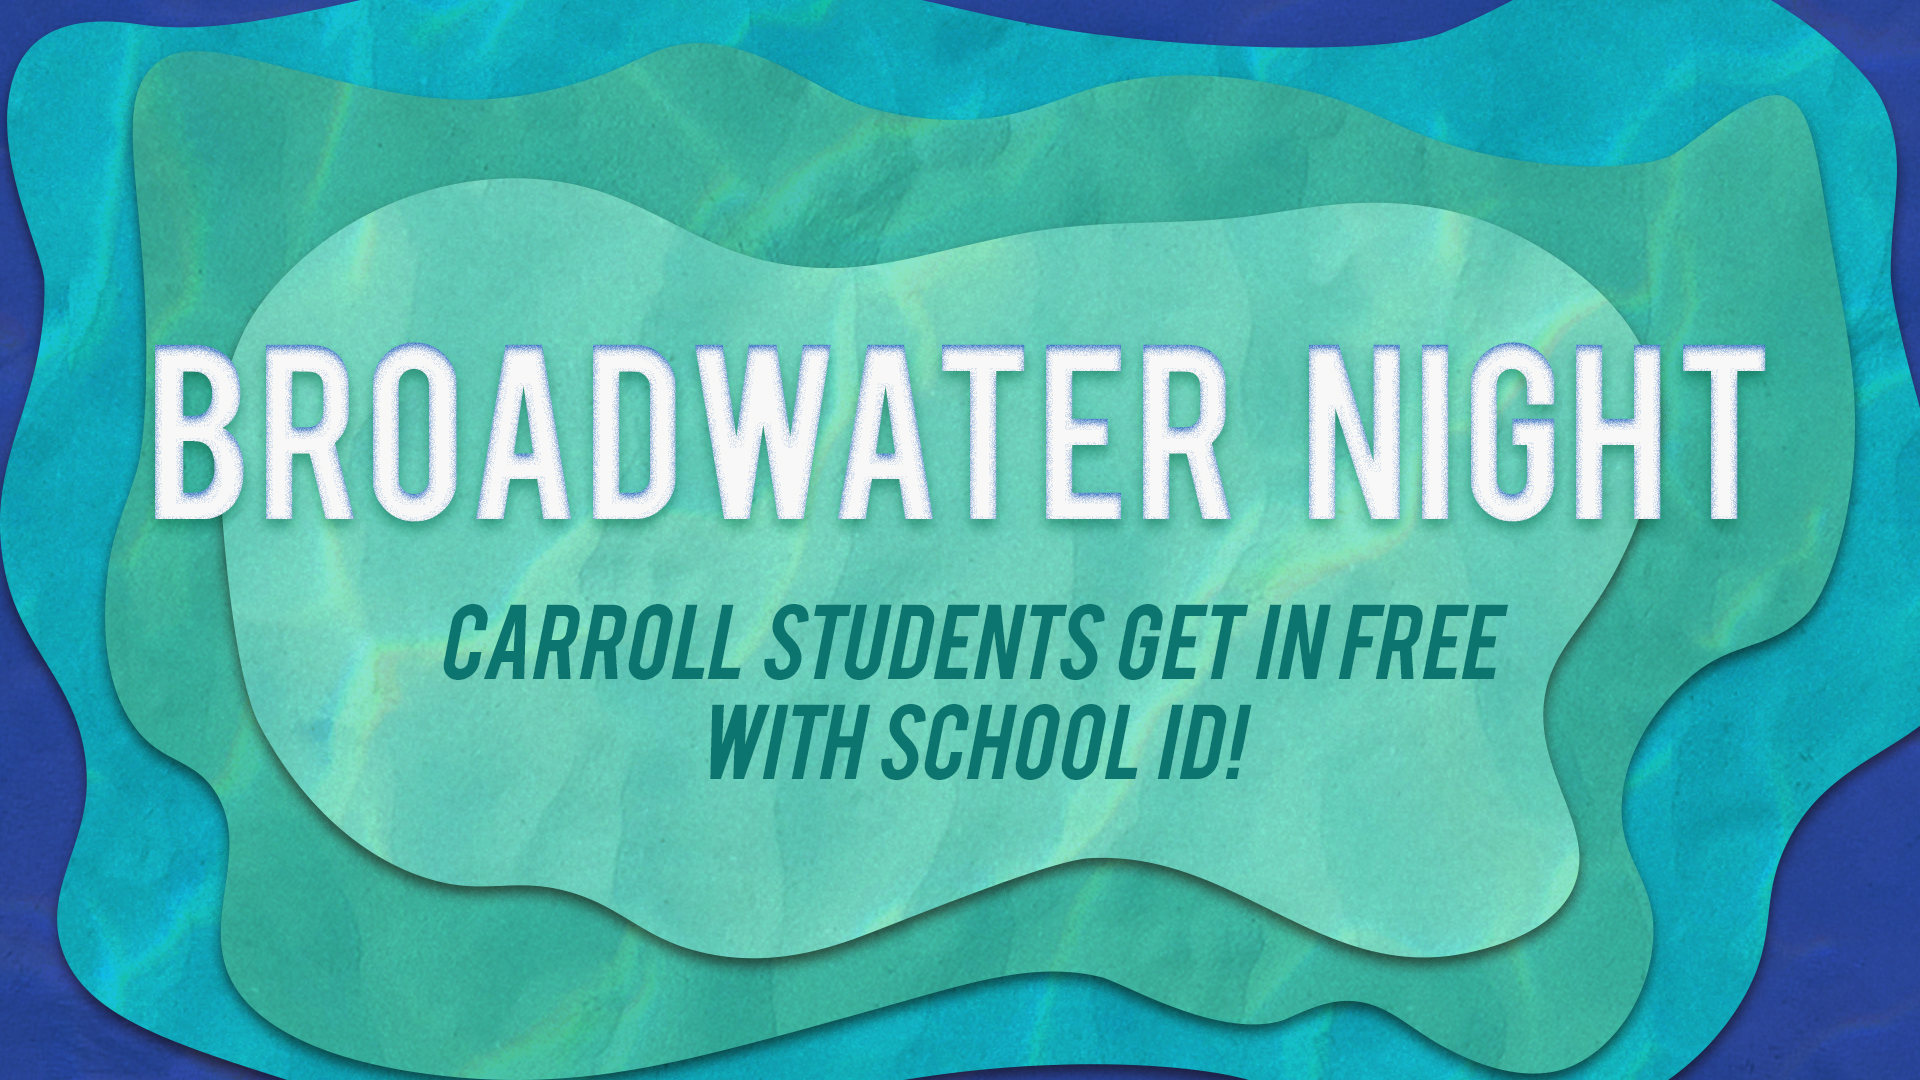 CSA Night at Broadwater